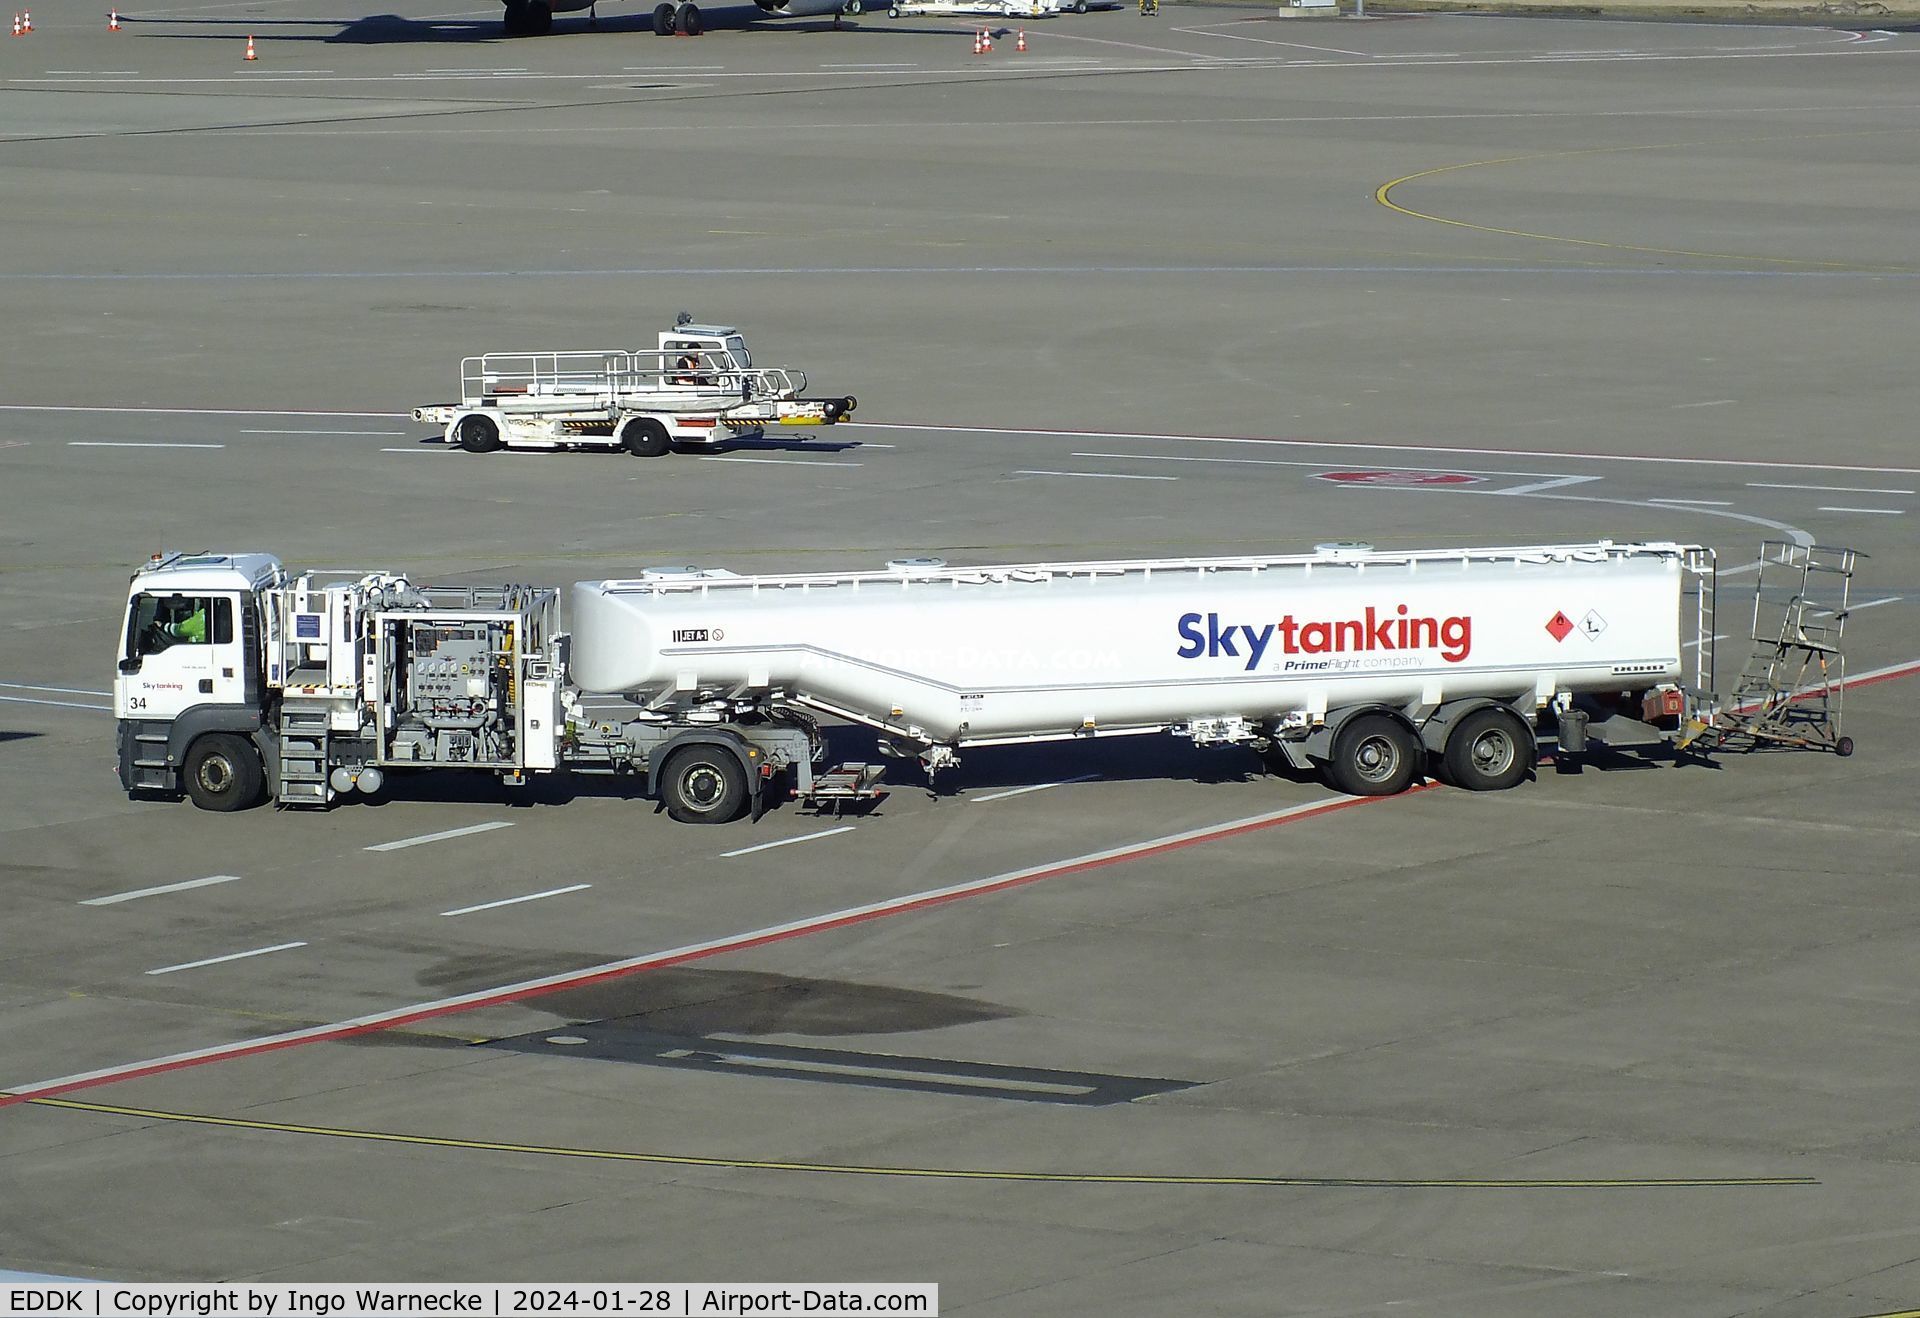 Cologne Bonn Airport, Cologne/Bonn Germany (EDDK) - airport fuel truck at Köln/Bonn airport